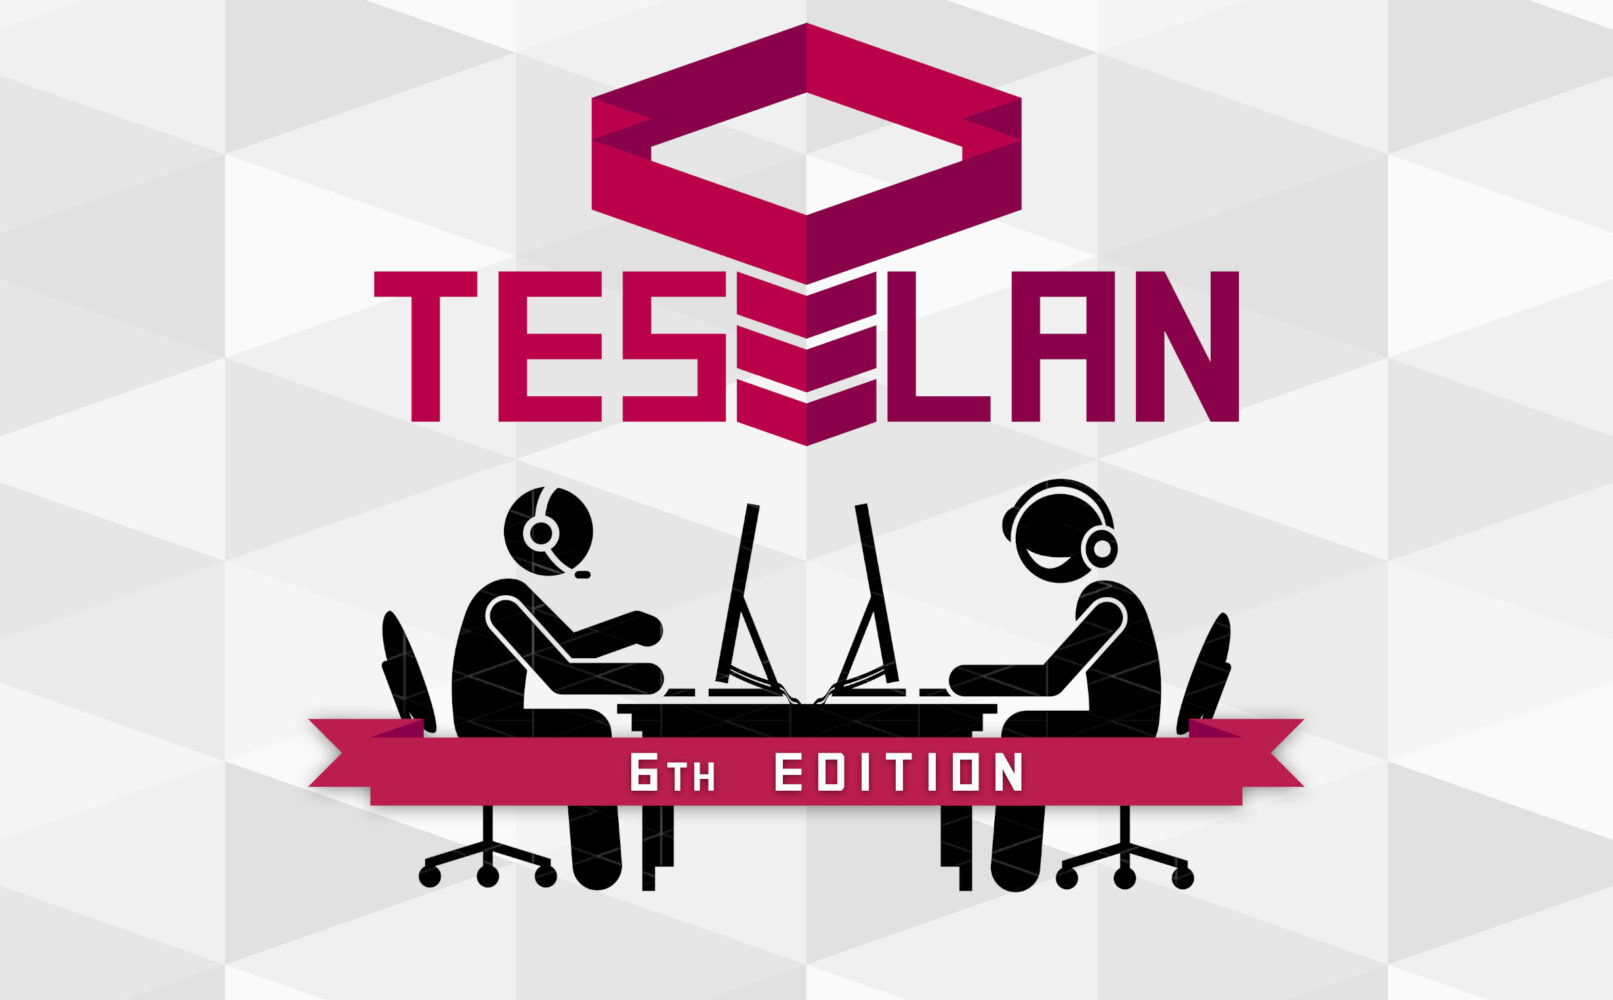 TesLAN 6th Edition